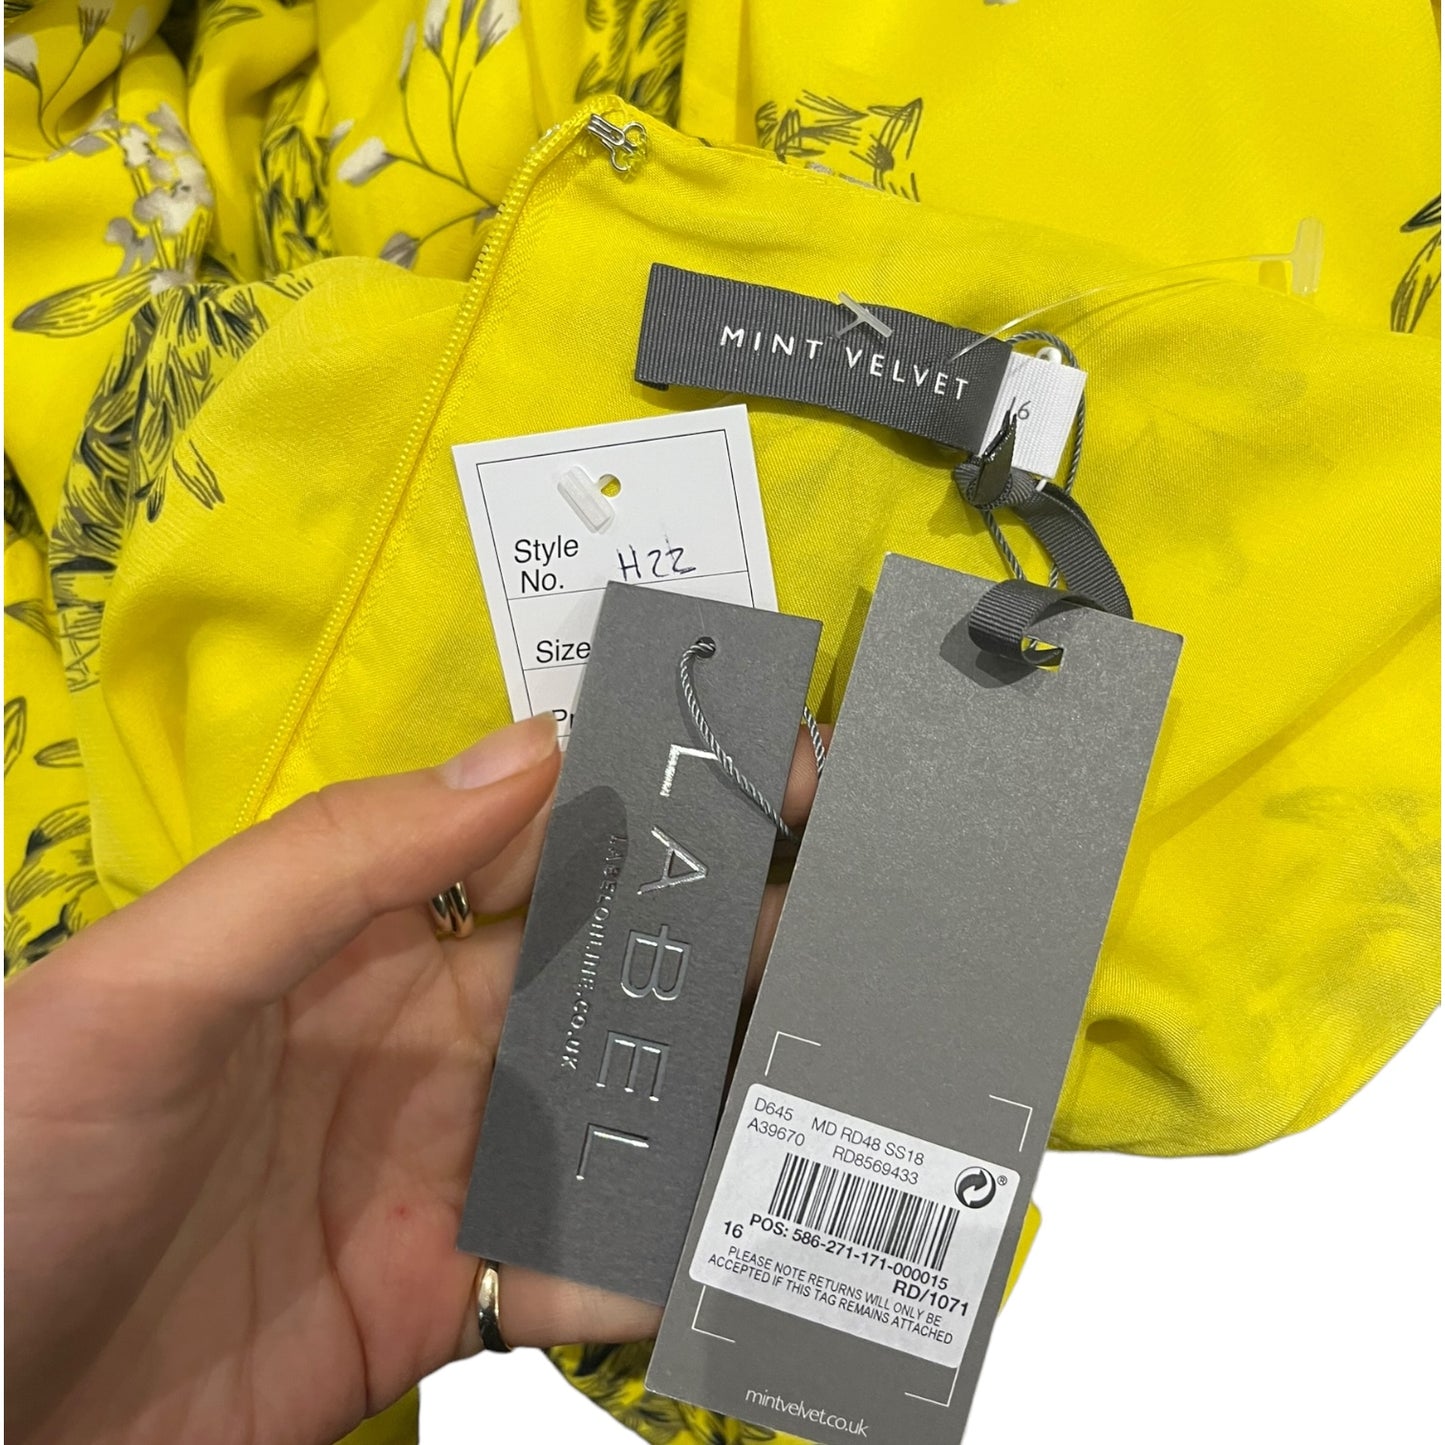 Mint Velvet Yellow Floral Dress - 16 - NEW